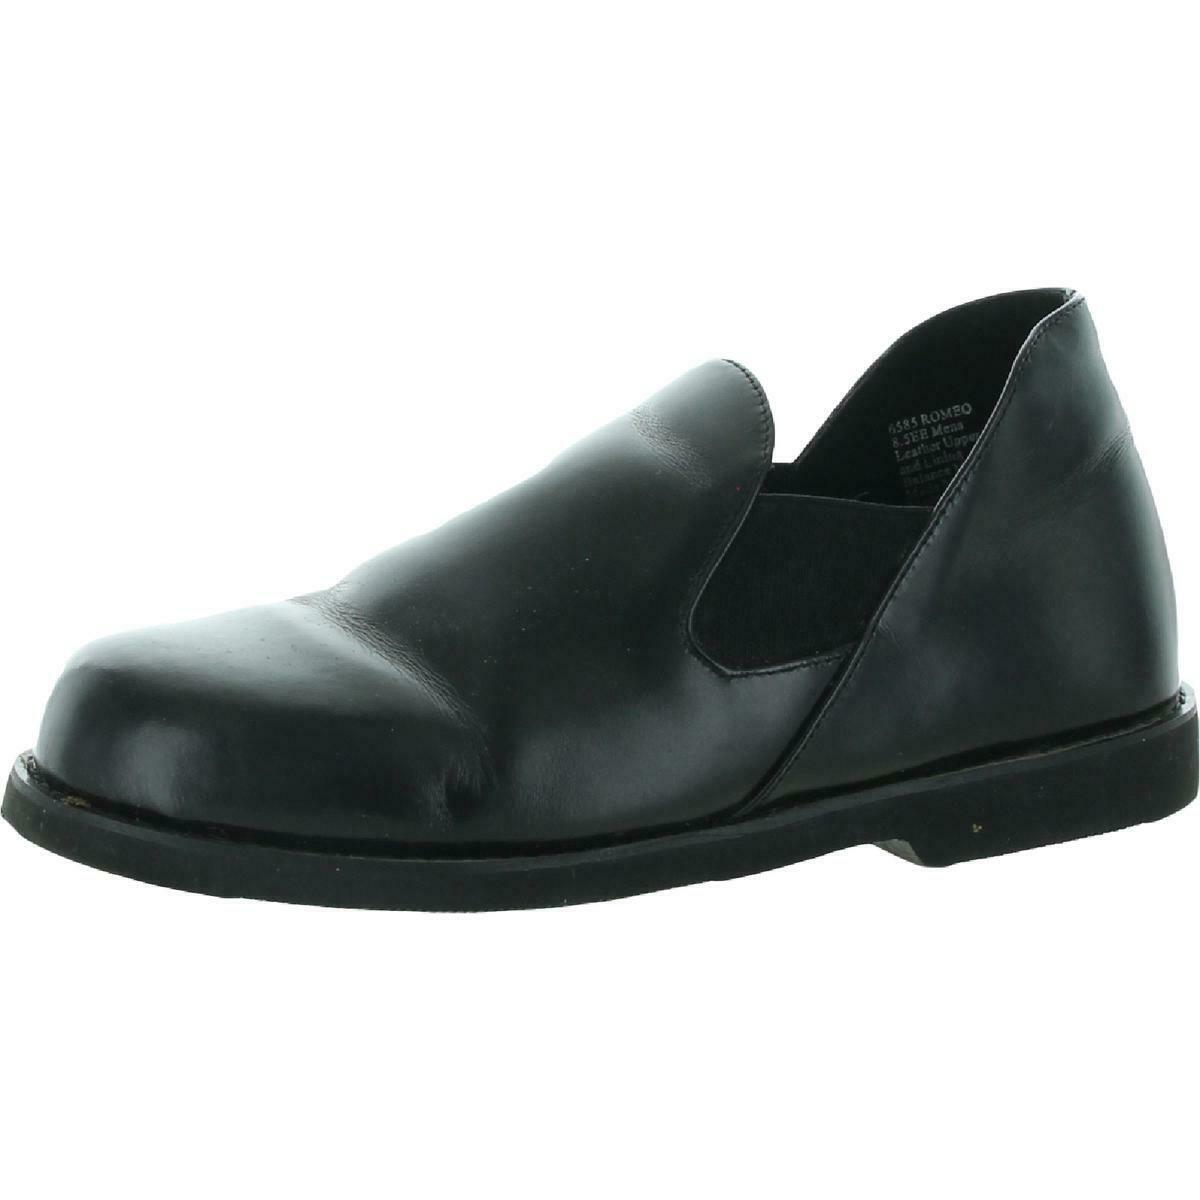 Slippers International Mens Romeo Black Dress Shoes 8.5 Extra Wide (2E) 9289